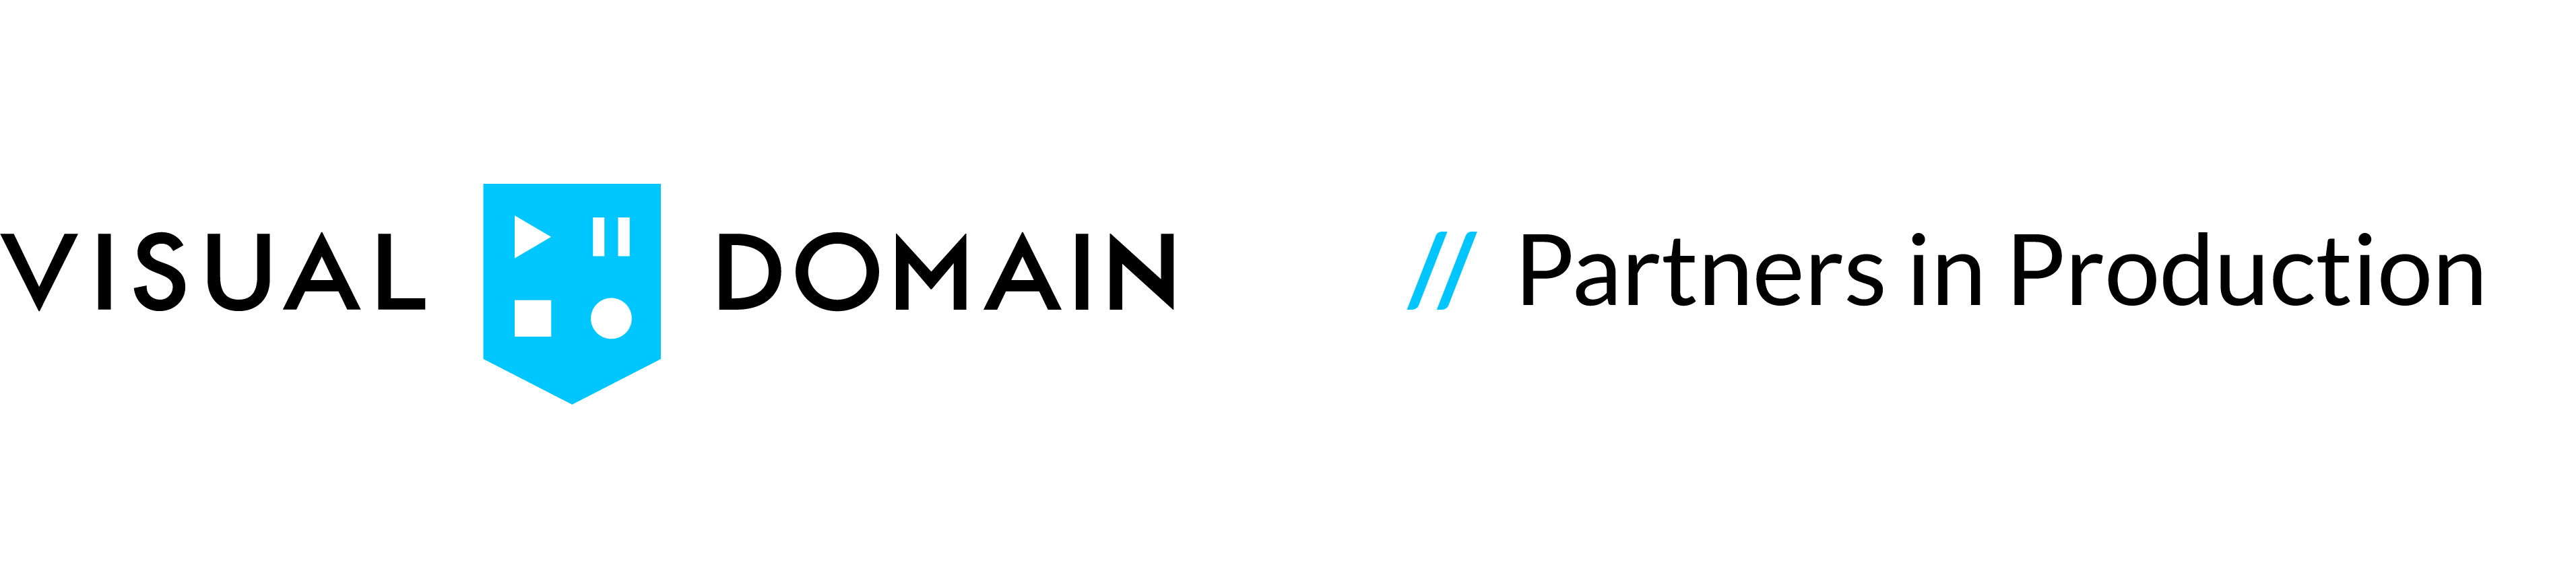 Visual Domain logo